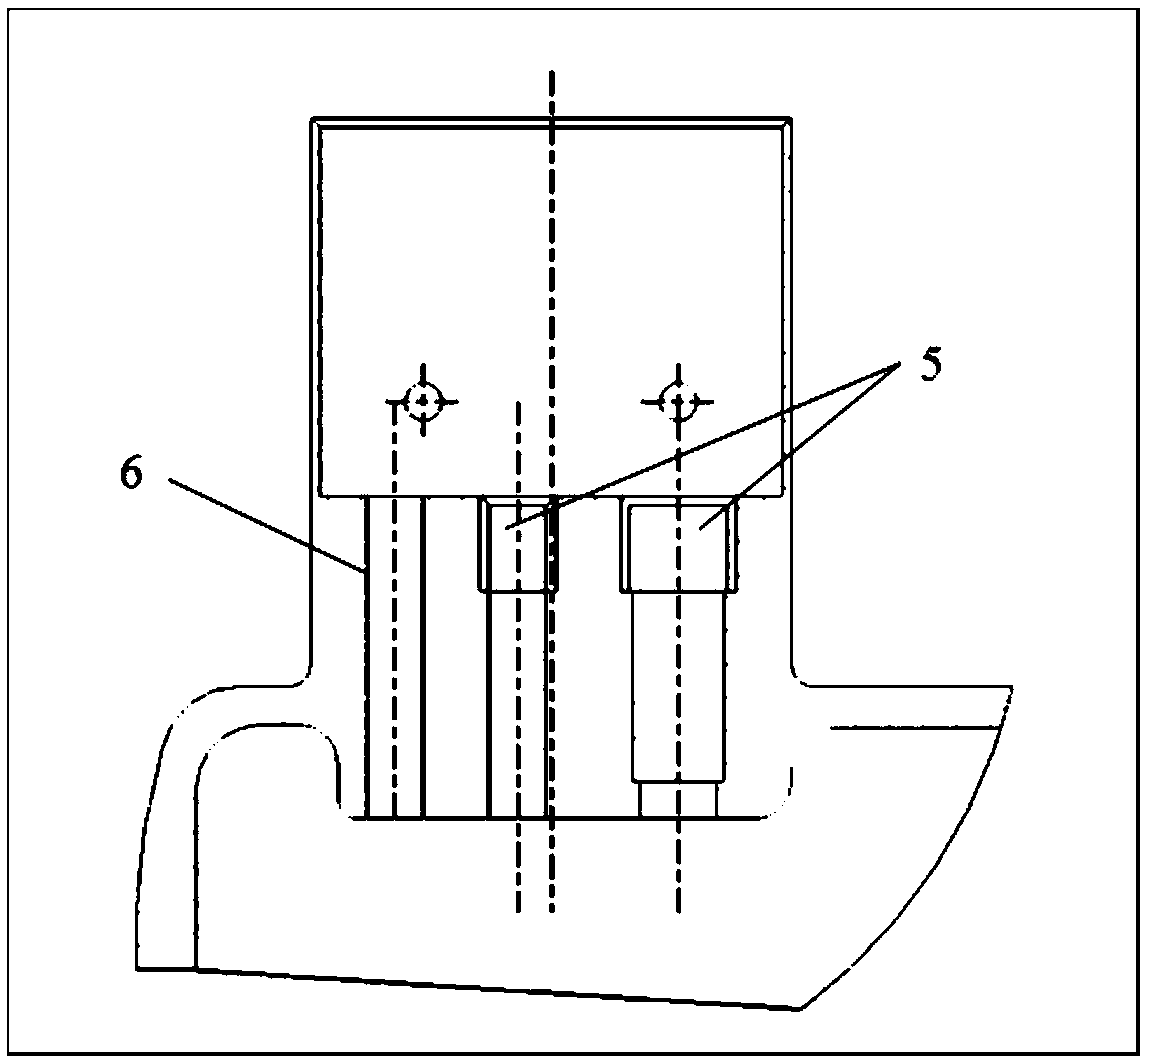 Anti-large overload combined distortion measuring rake on intake passage